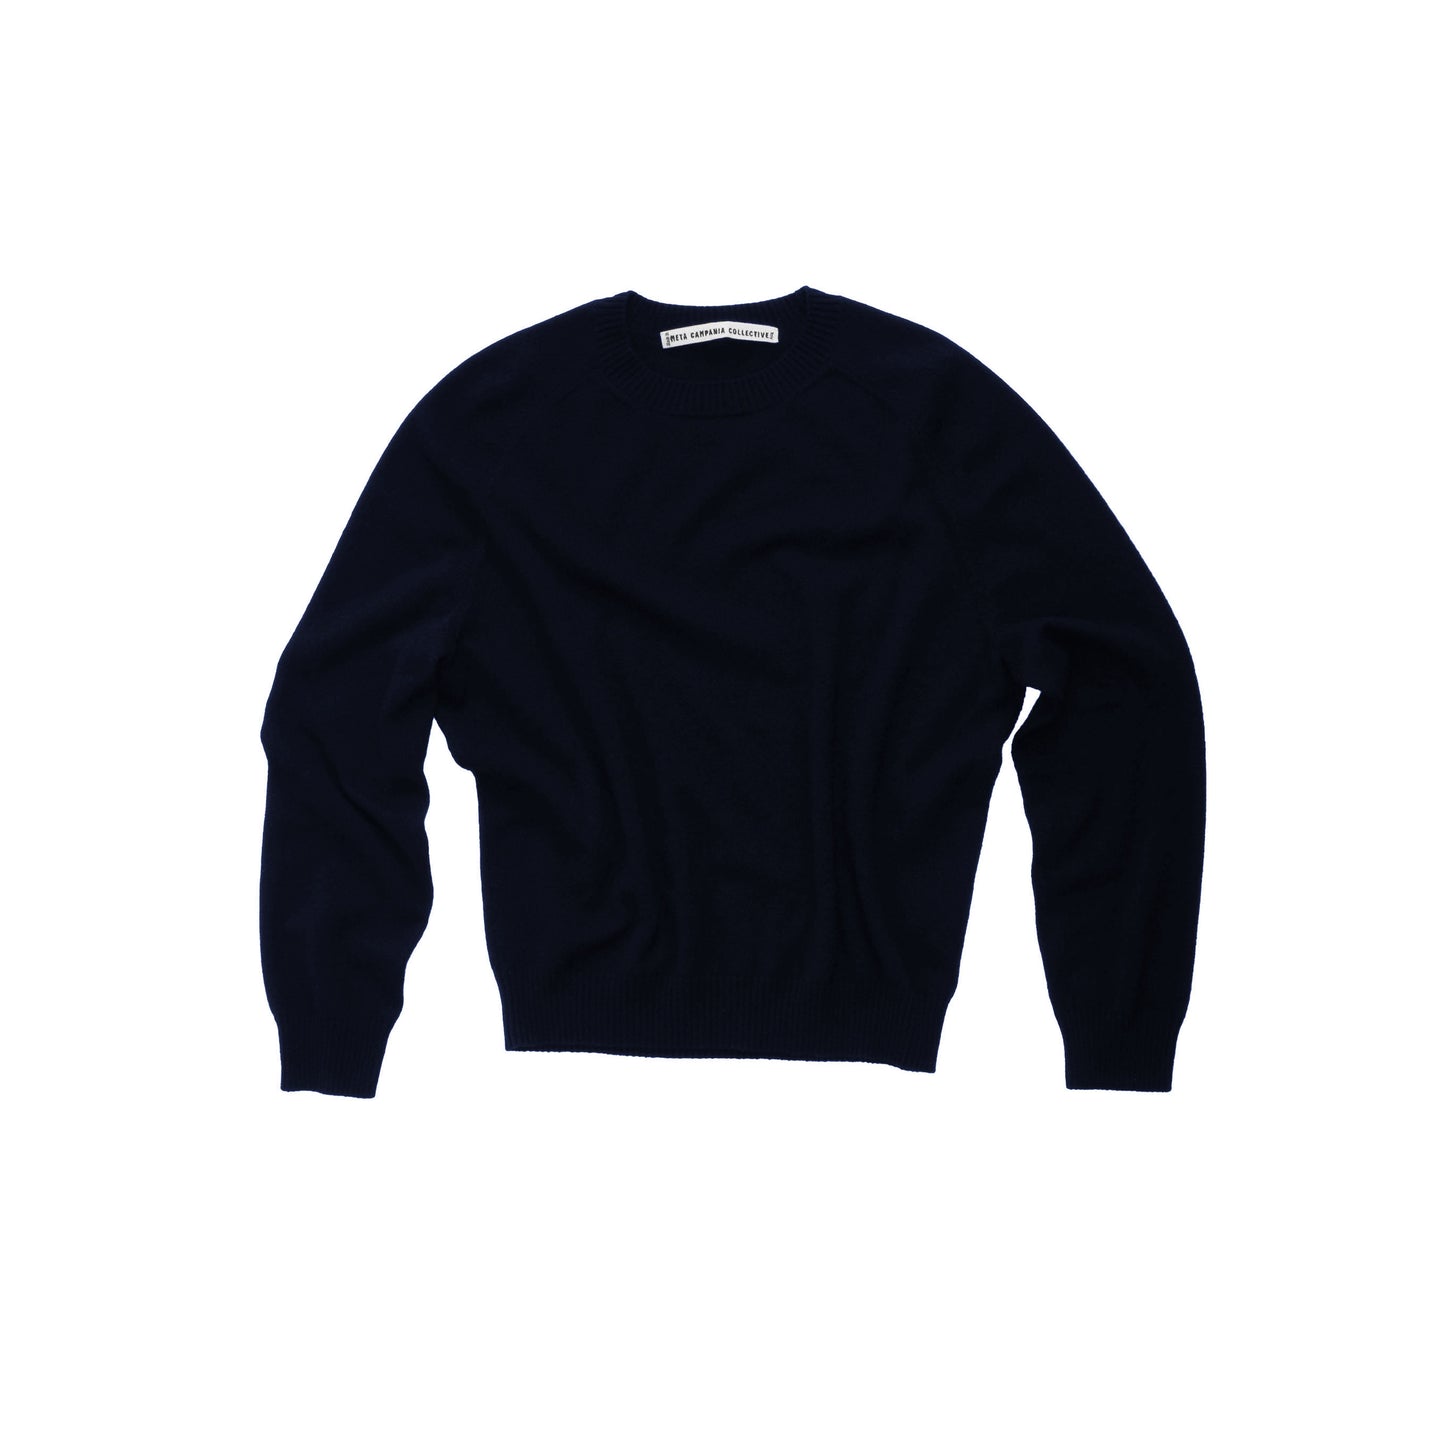 Jack Crew Neck Cashmere Sweater Midnight Blue